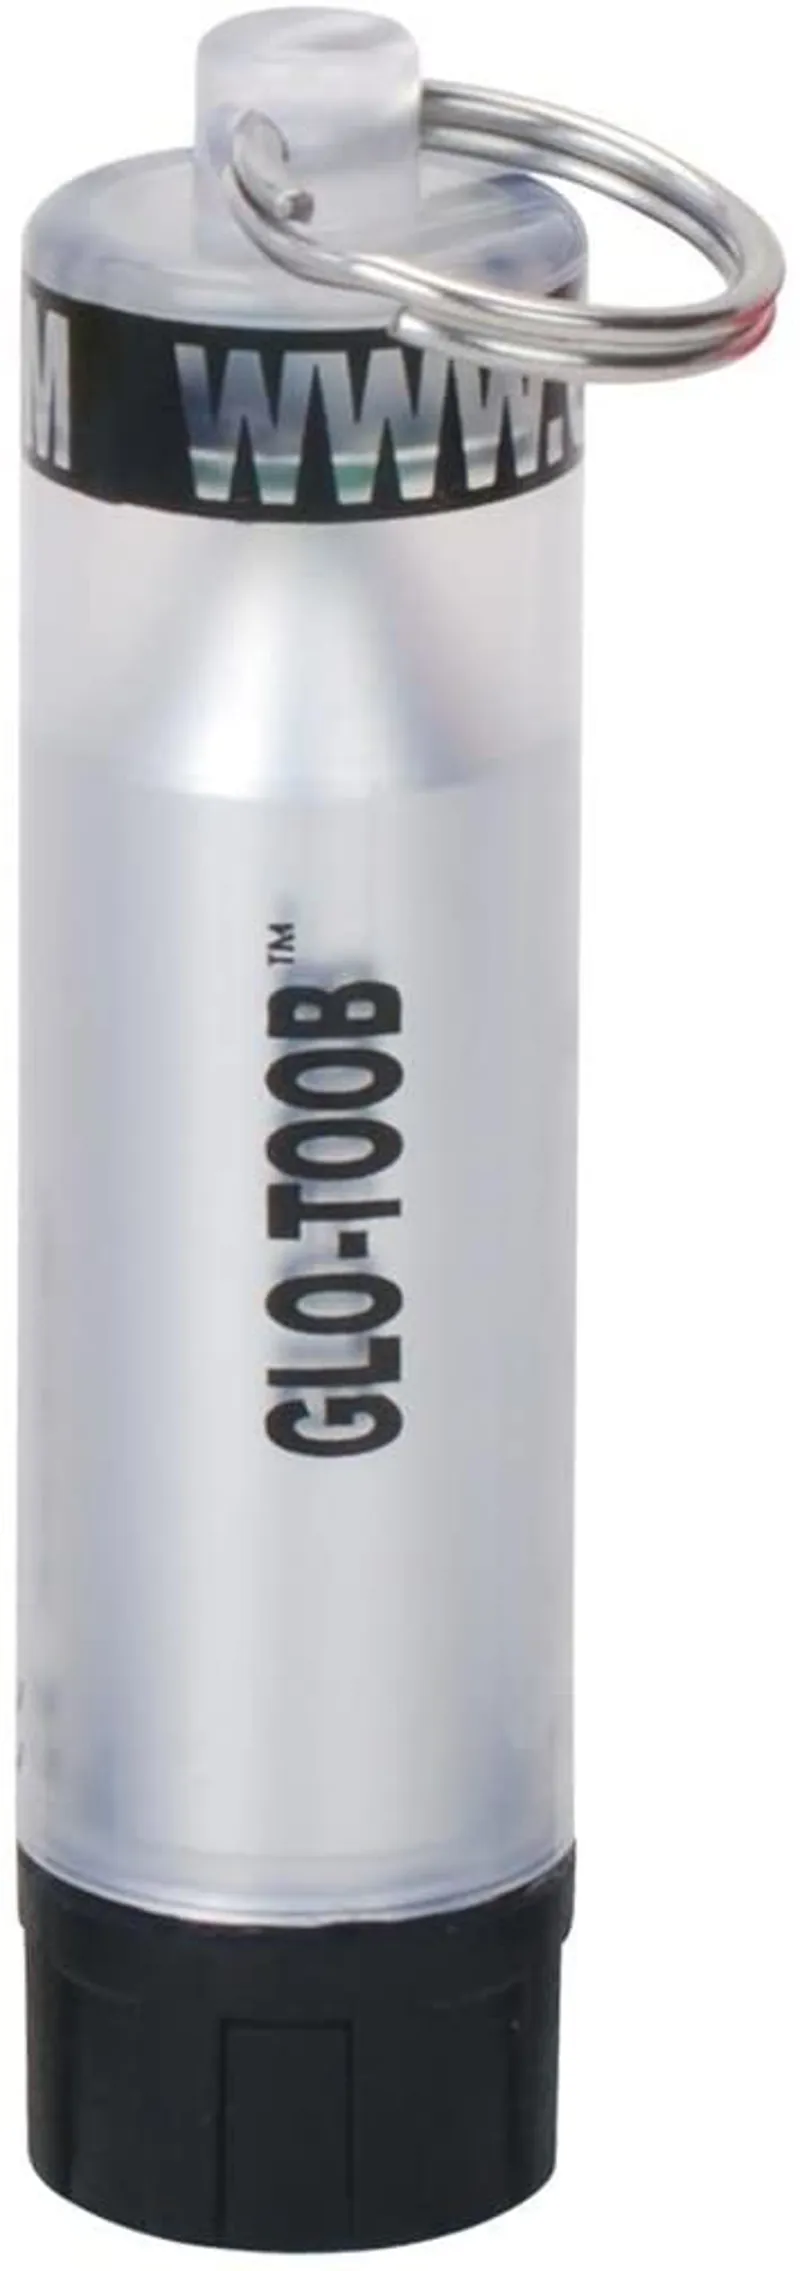 GloToob AAA Battery Powered Light Stick Marker  White